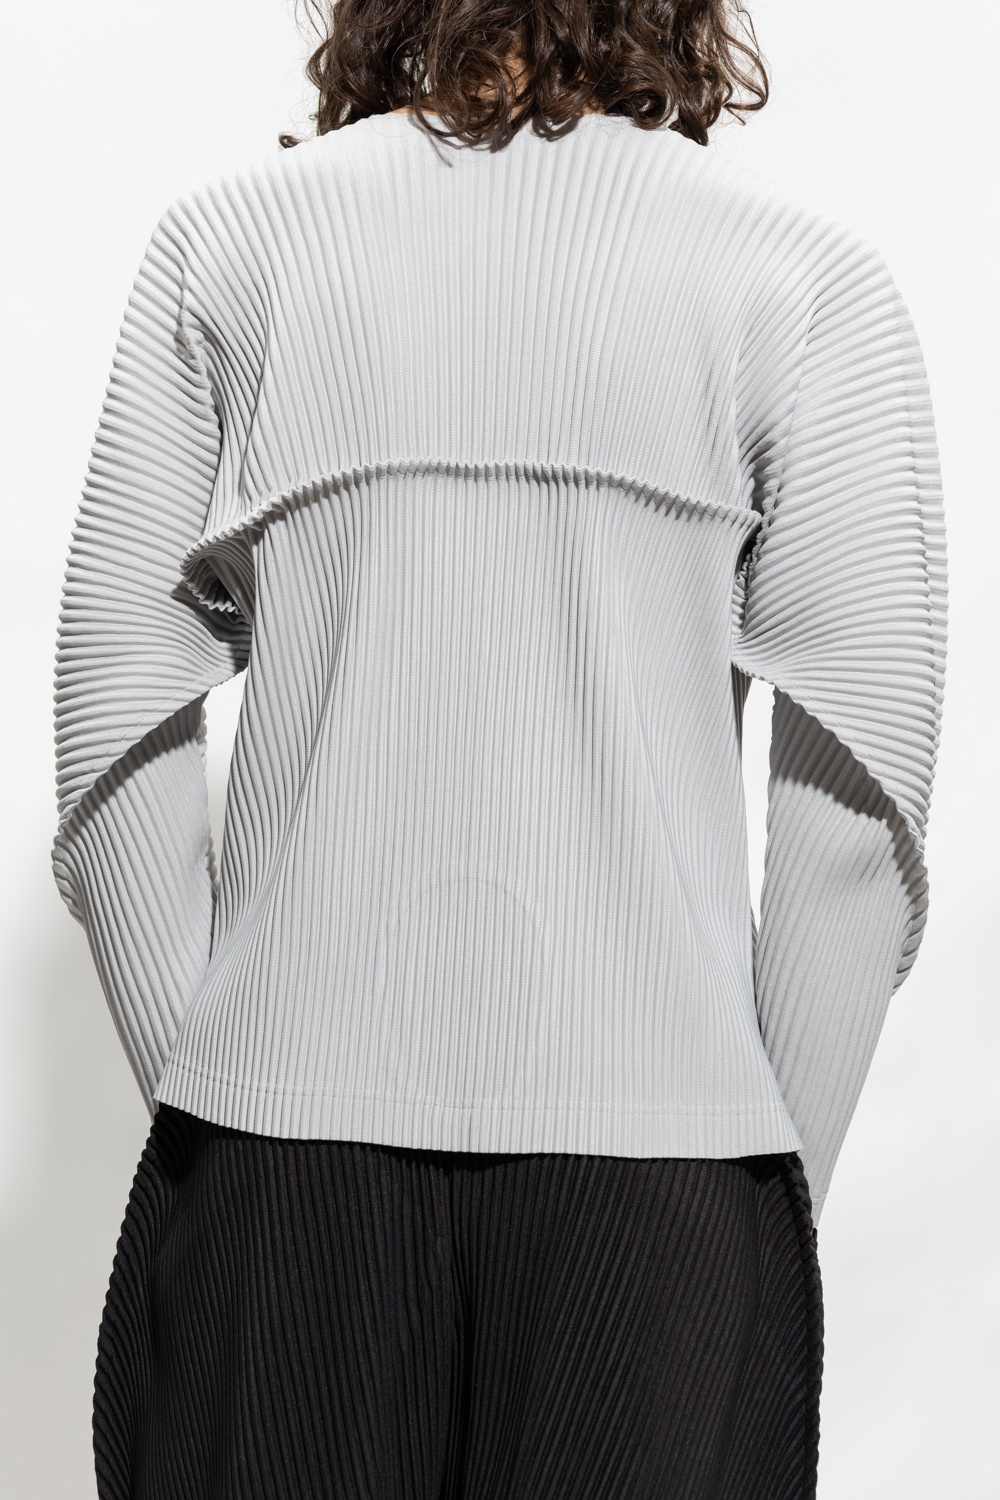 HOMME+ Contrast Stitch Short Sleeve Shirt White